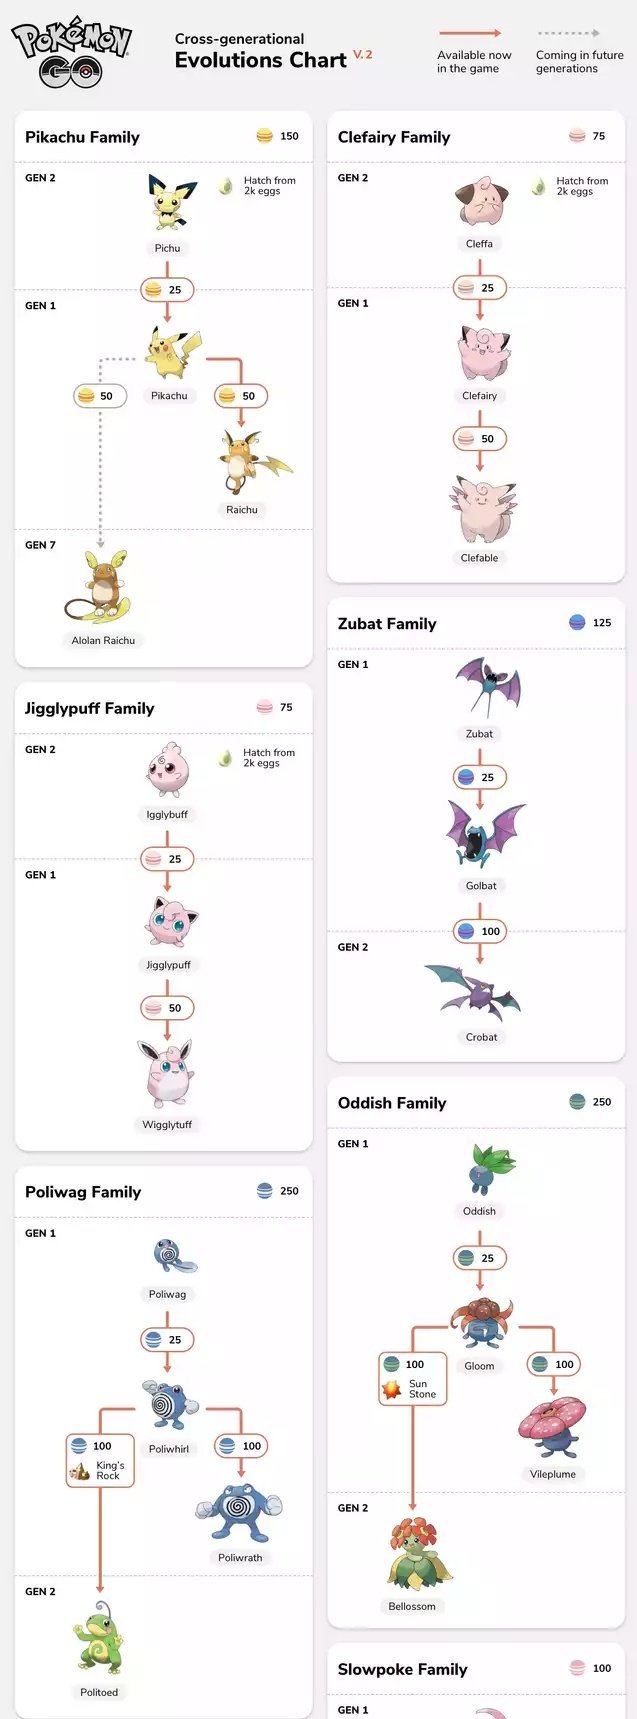 Pikachu evolution chart